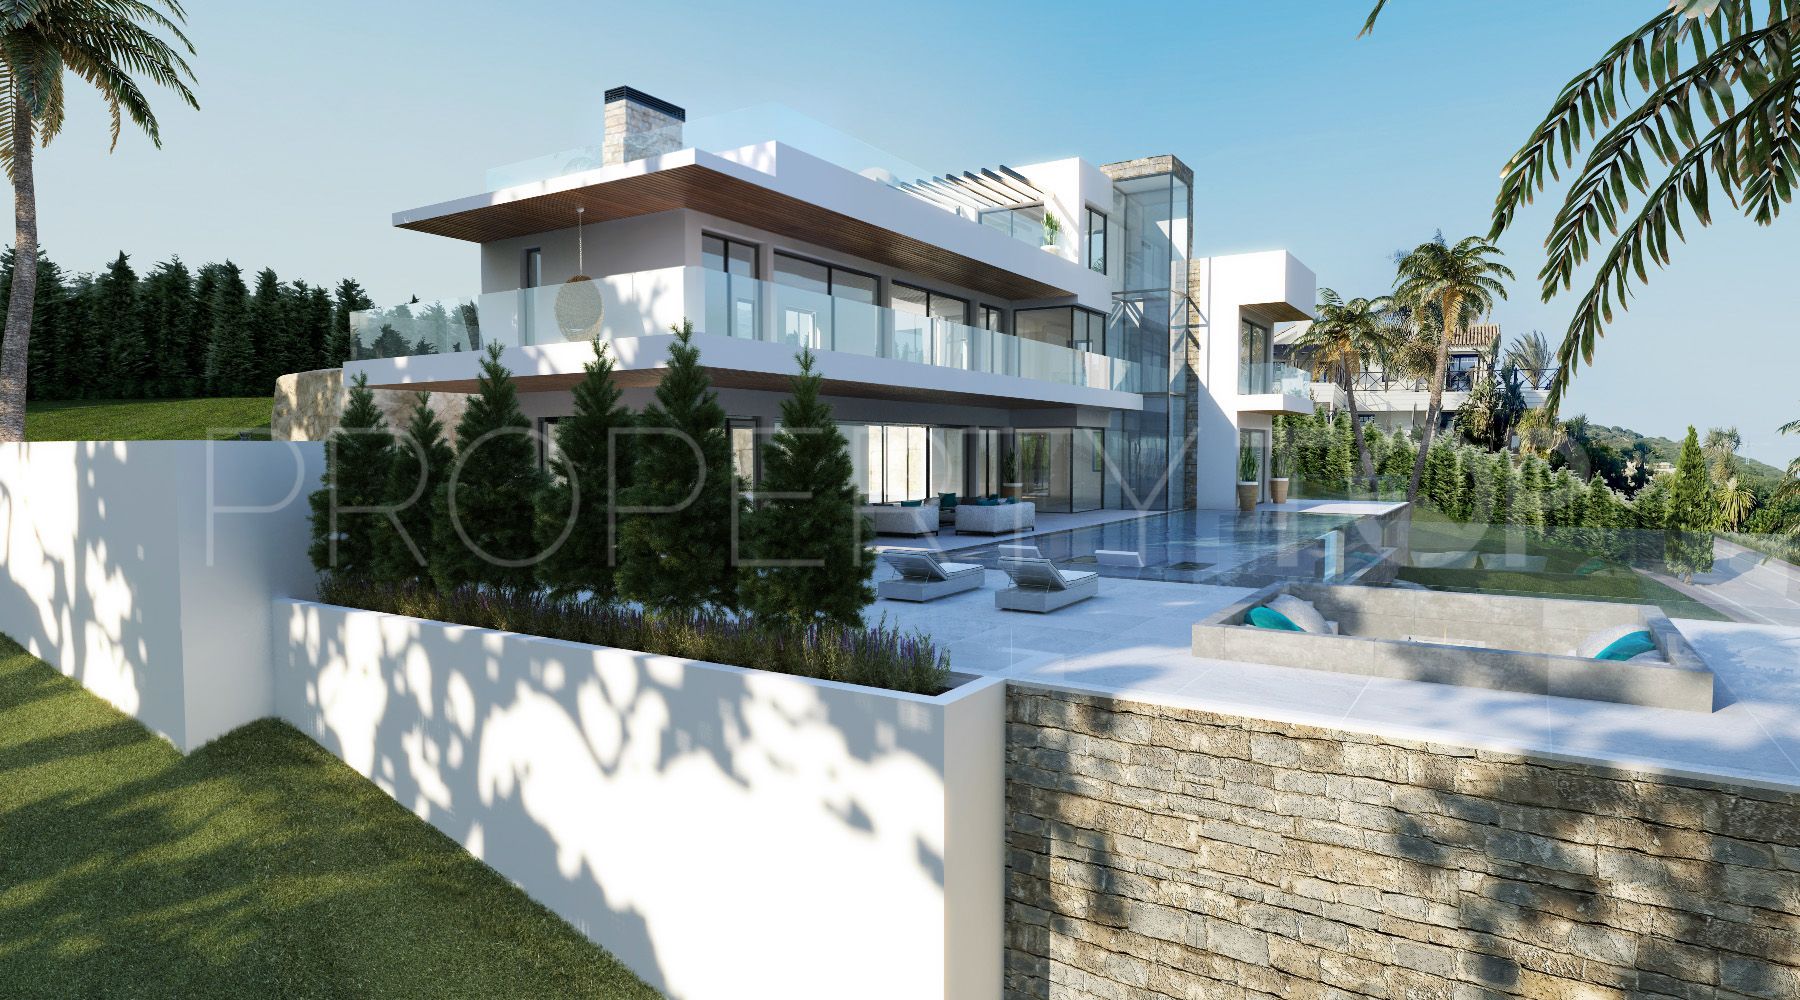 Villa for sale in Sotogrande Alto with 5 bedrooms